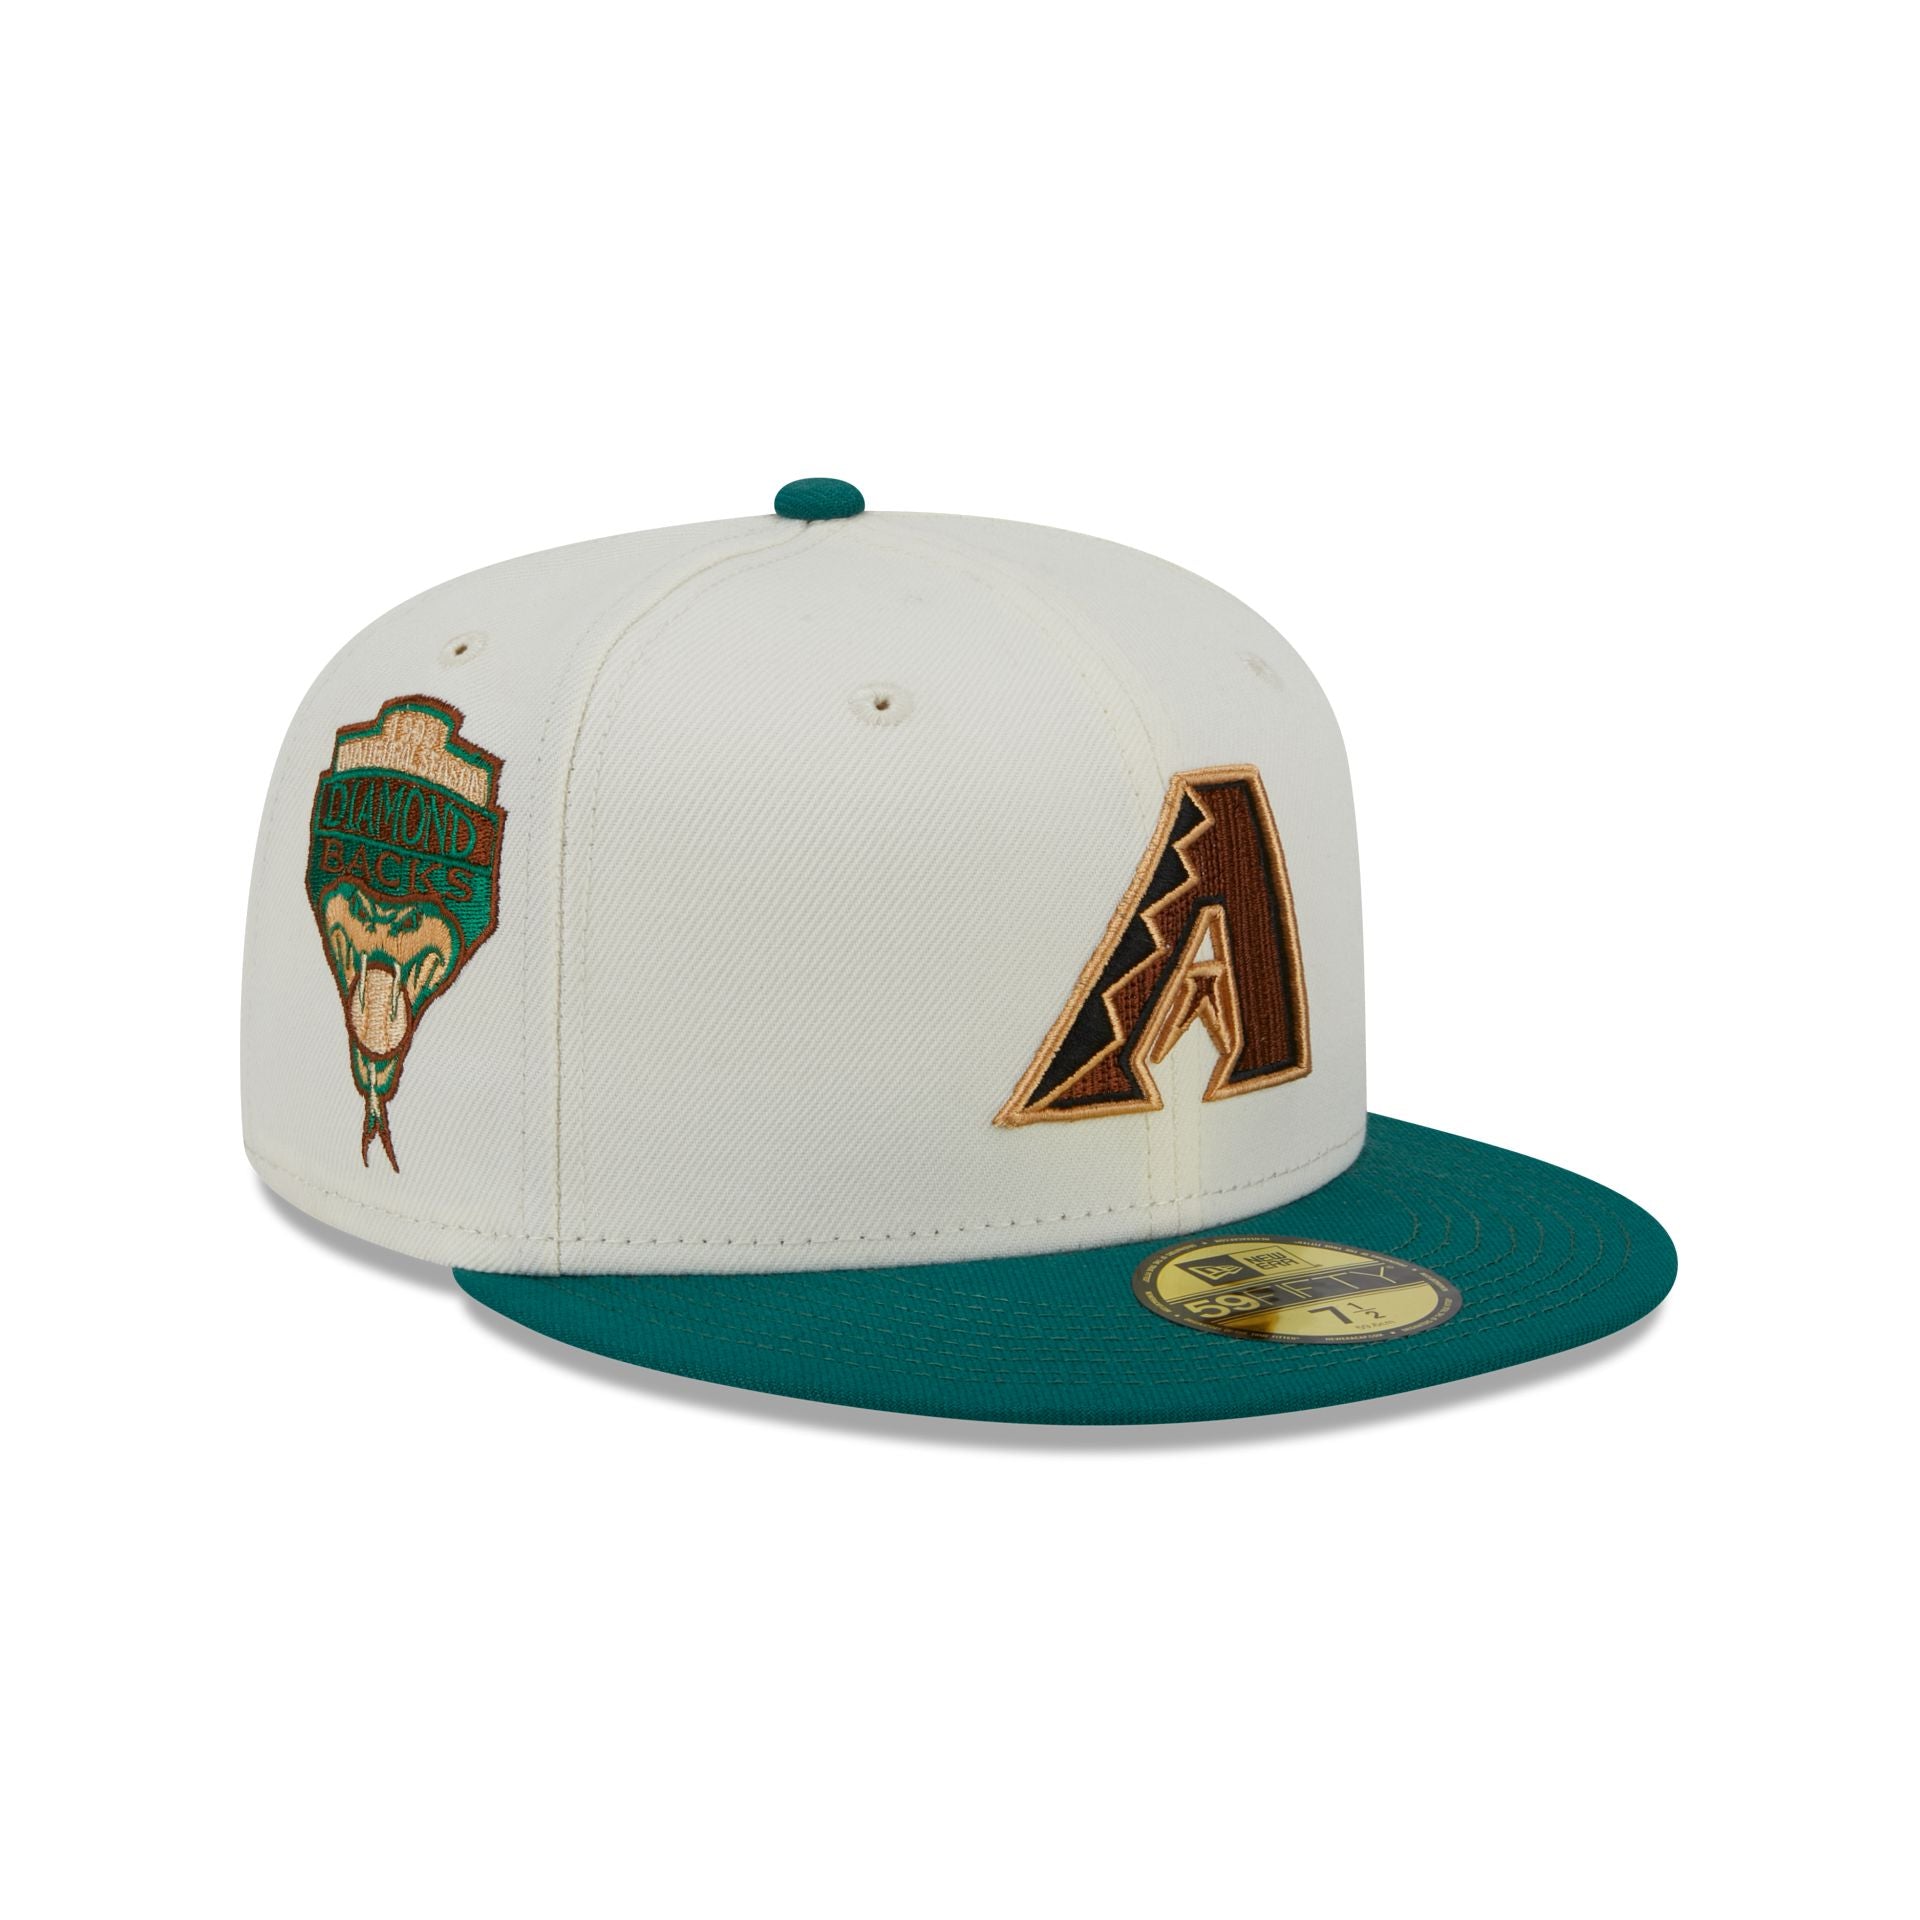 Arizona Diamondbacks New Era 2023 Father's Day Side Patch 59FIFTY Fitted Hat